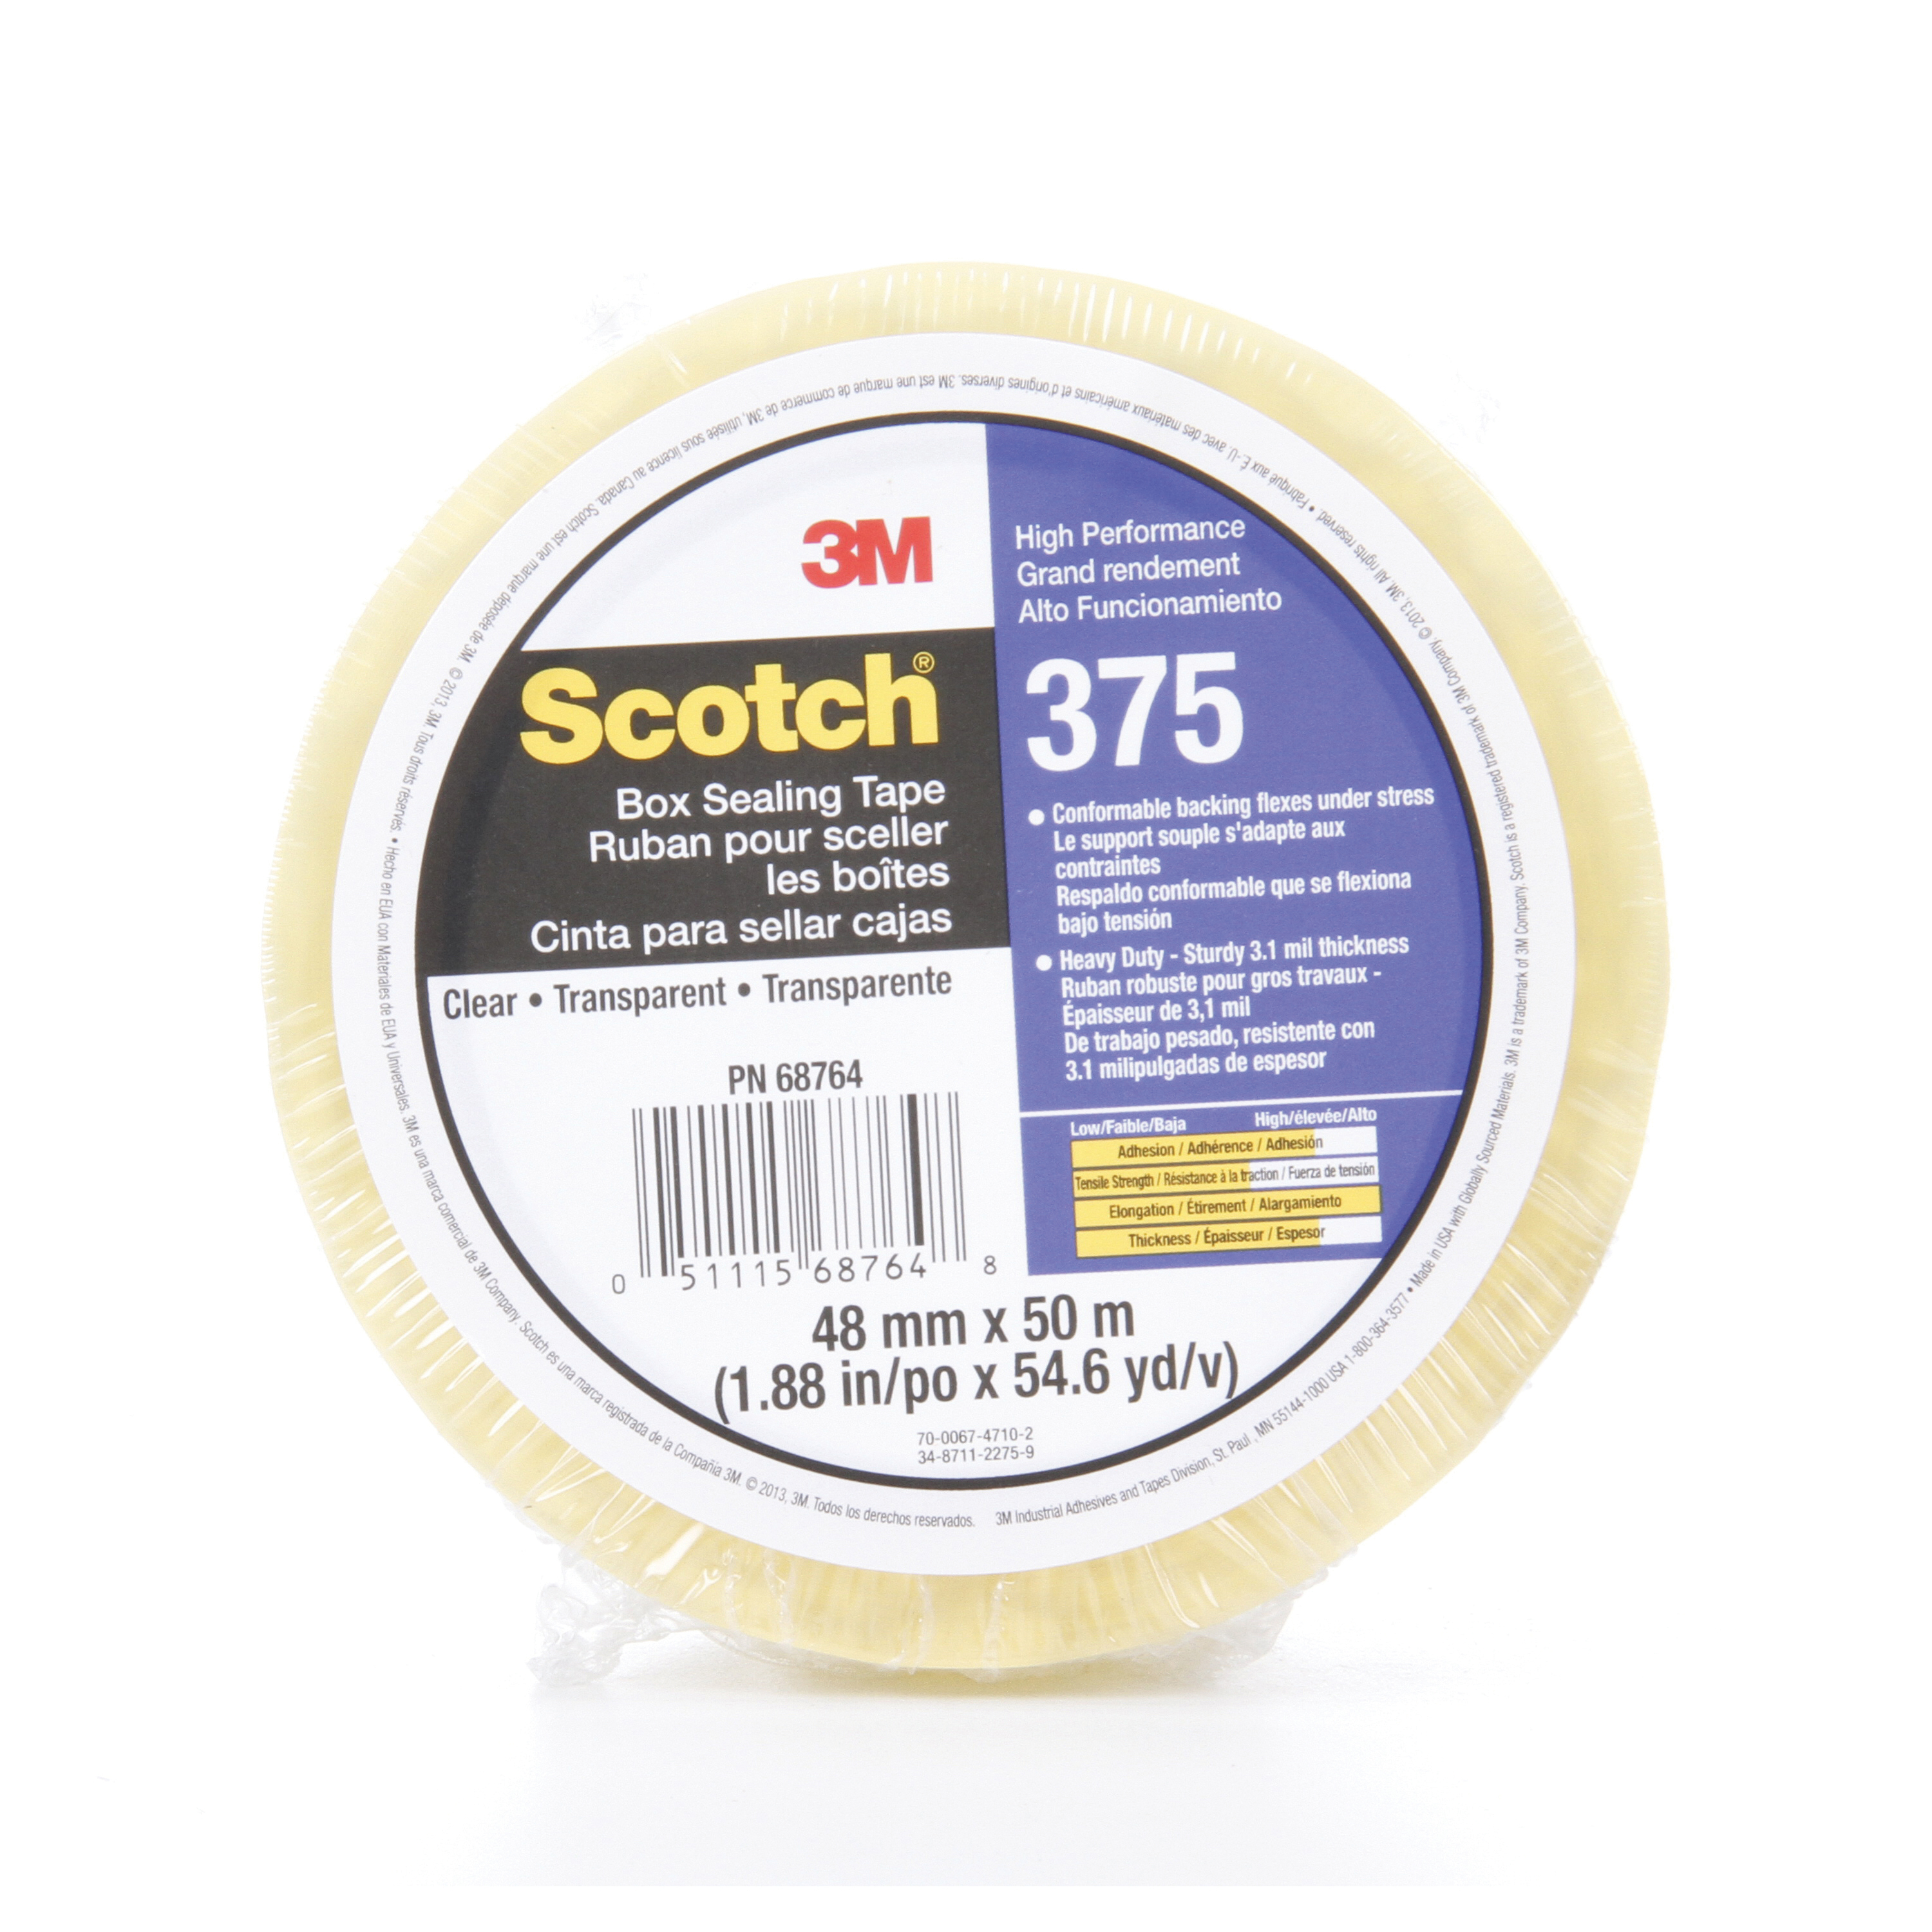 Scotch® 051115-68761 Medium Performance Box Sealing Tape, 50 m L x 48 mm W, 2.2 mil THK, Hot Melt Synthetic Rubber Resin Adhesive, Polypropylene Film Backing, Tan